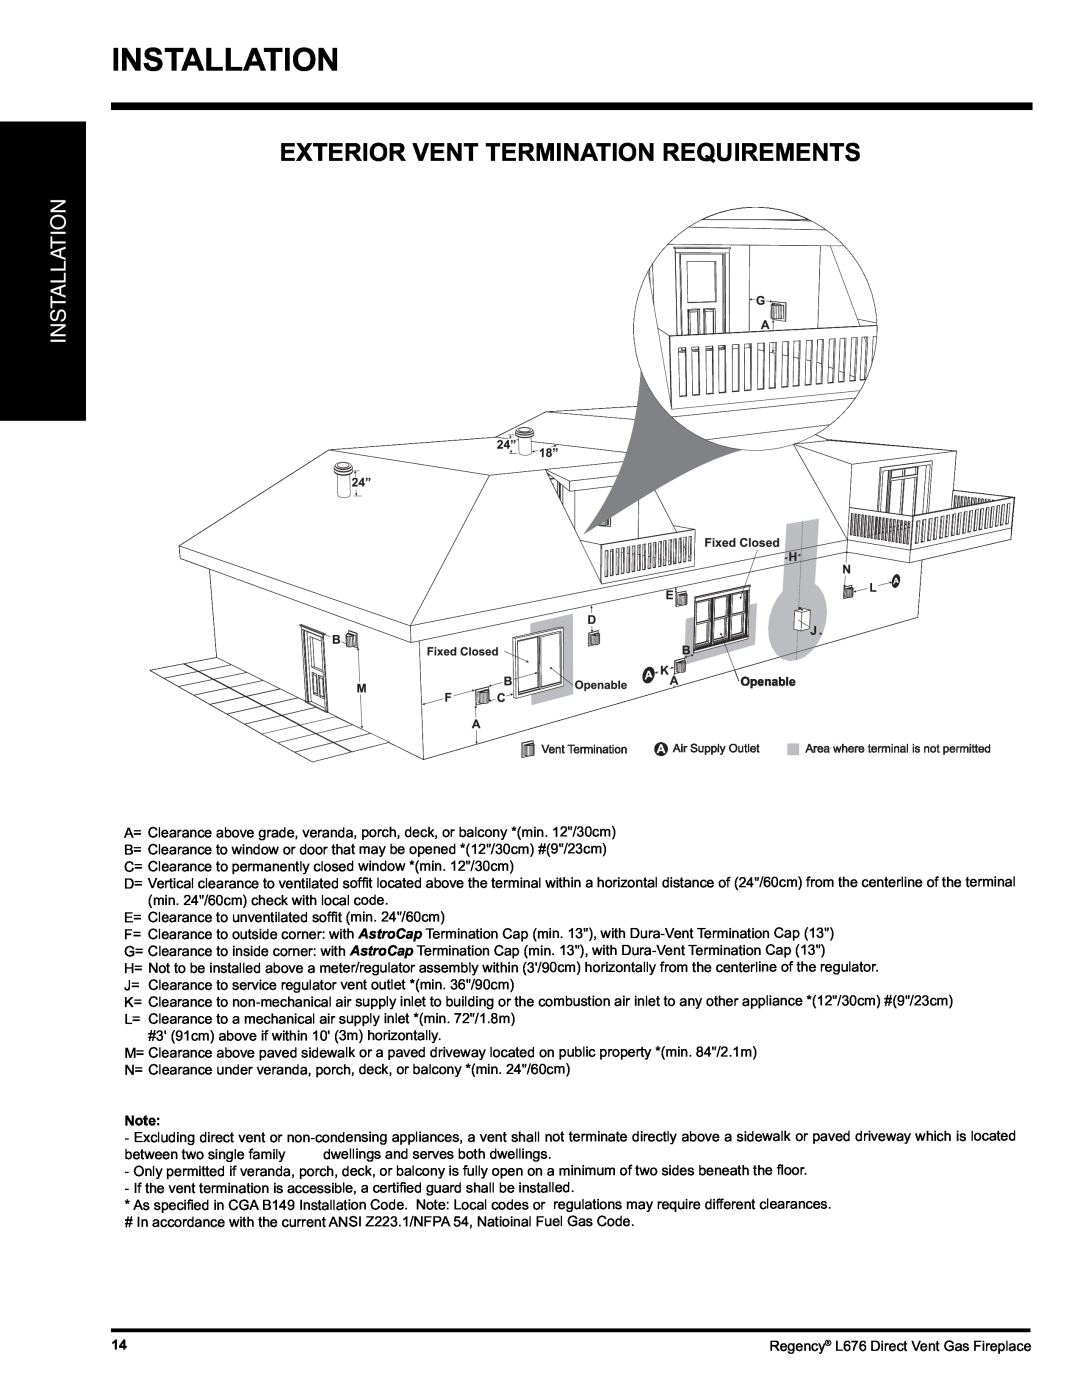 Regency L676 installation manual Installation, Exterior Vent Termination Requirements 